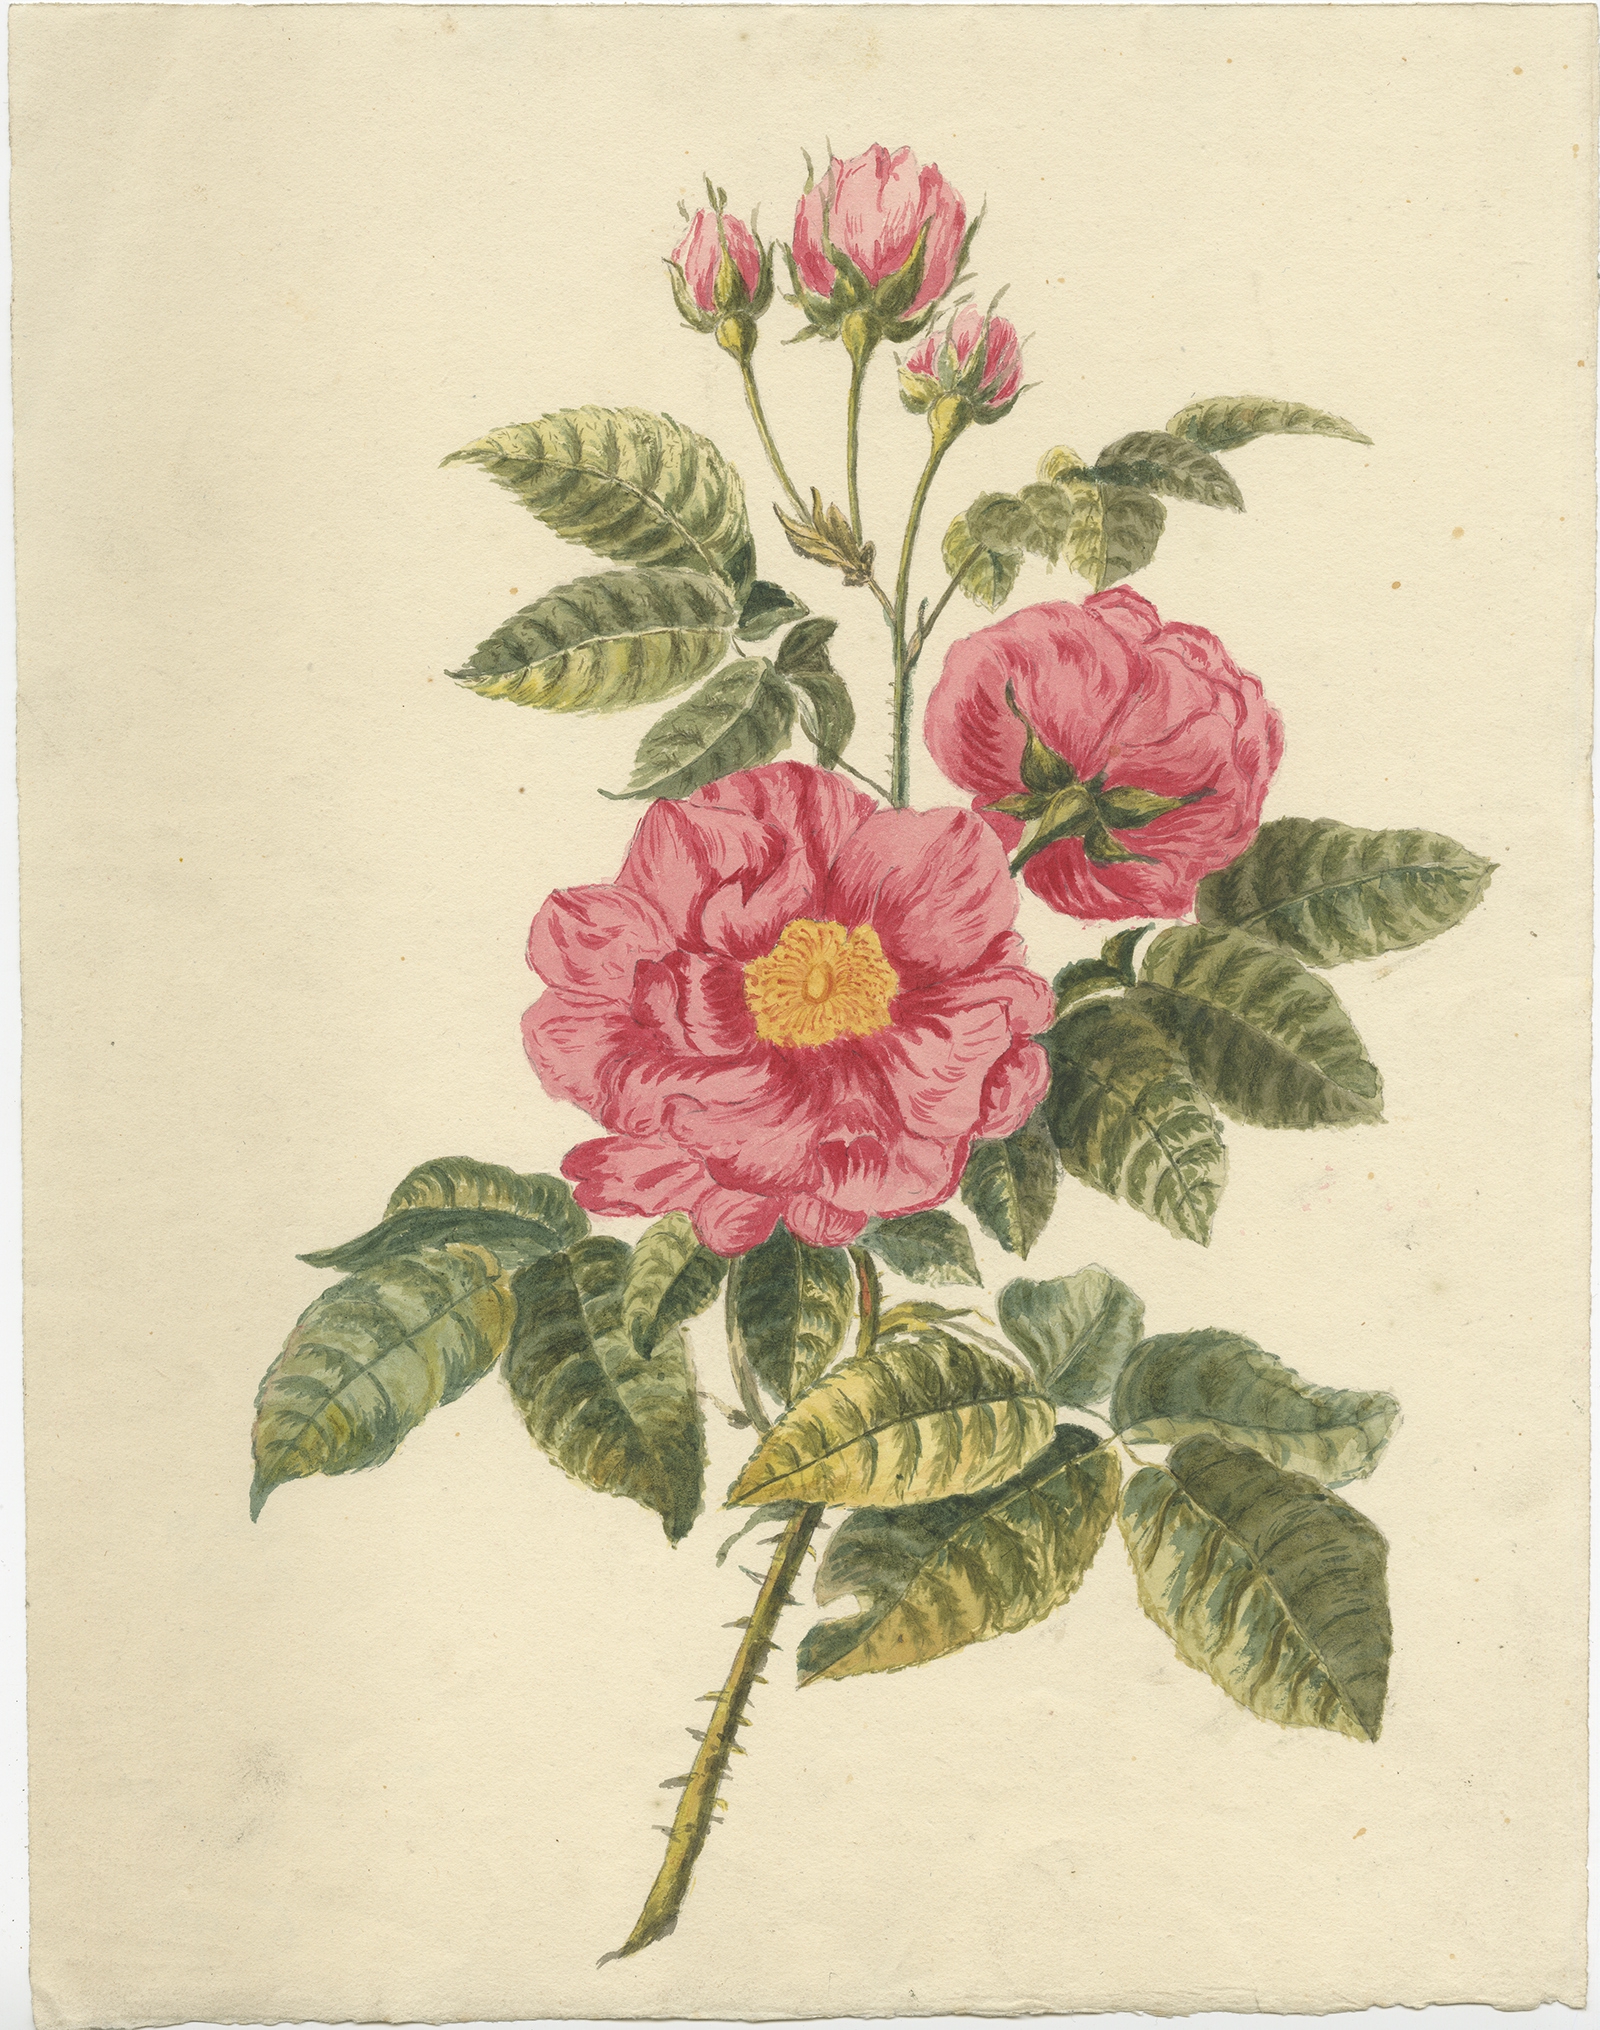 Antique Botany Print of Roses (c.1880)